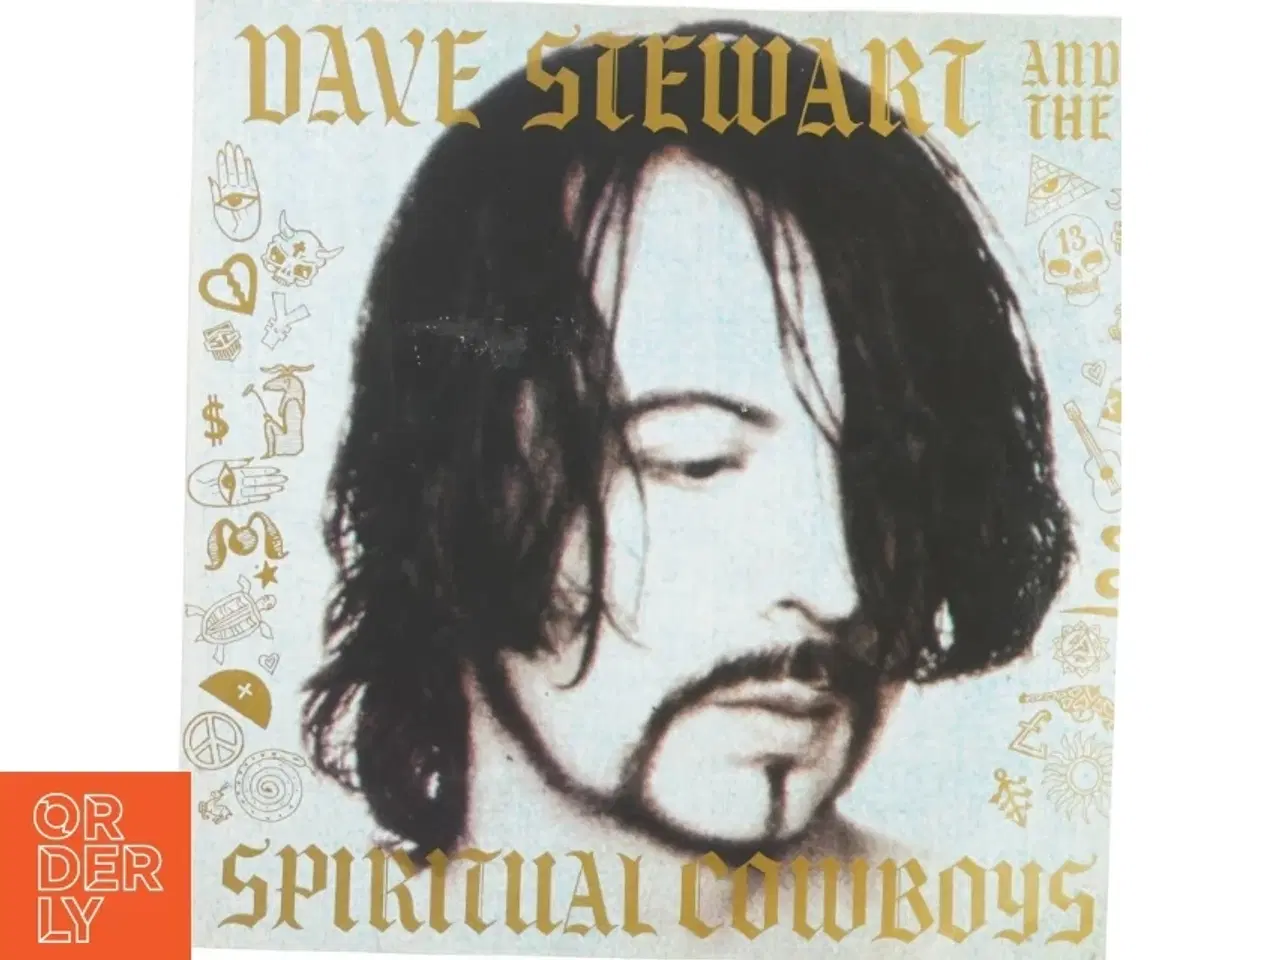 Billede 1 - Lp plade dave stewart and the spiritual cowboys fra Bmg Records (str. 31 x 31 cm)